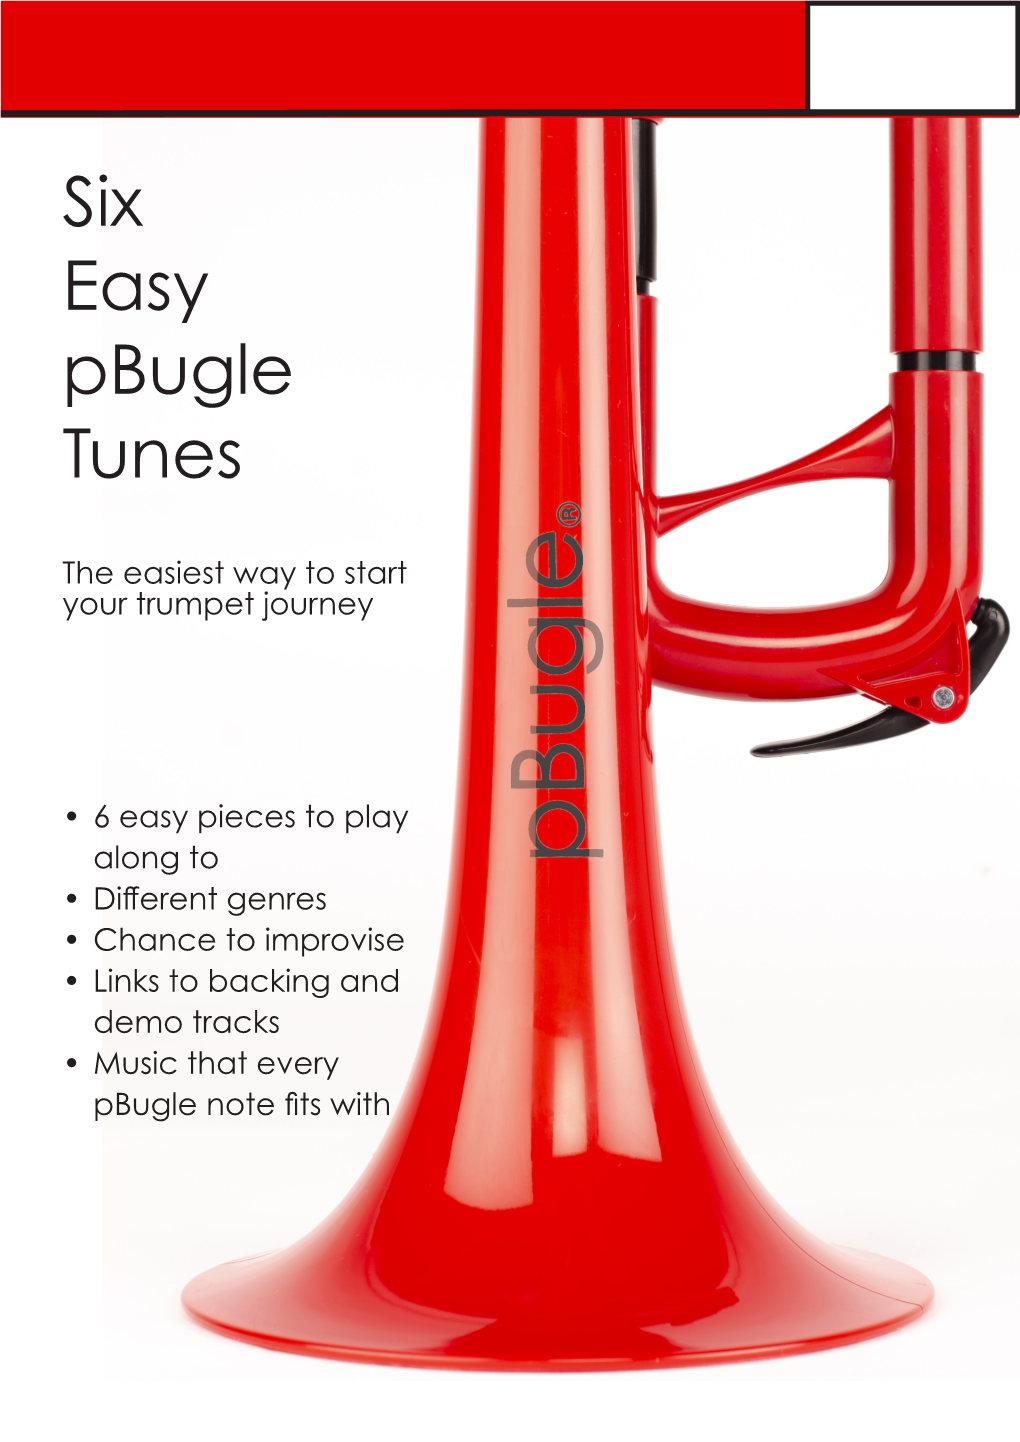 Six Easy Pbugle Tunes